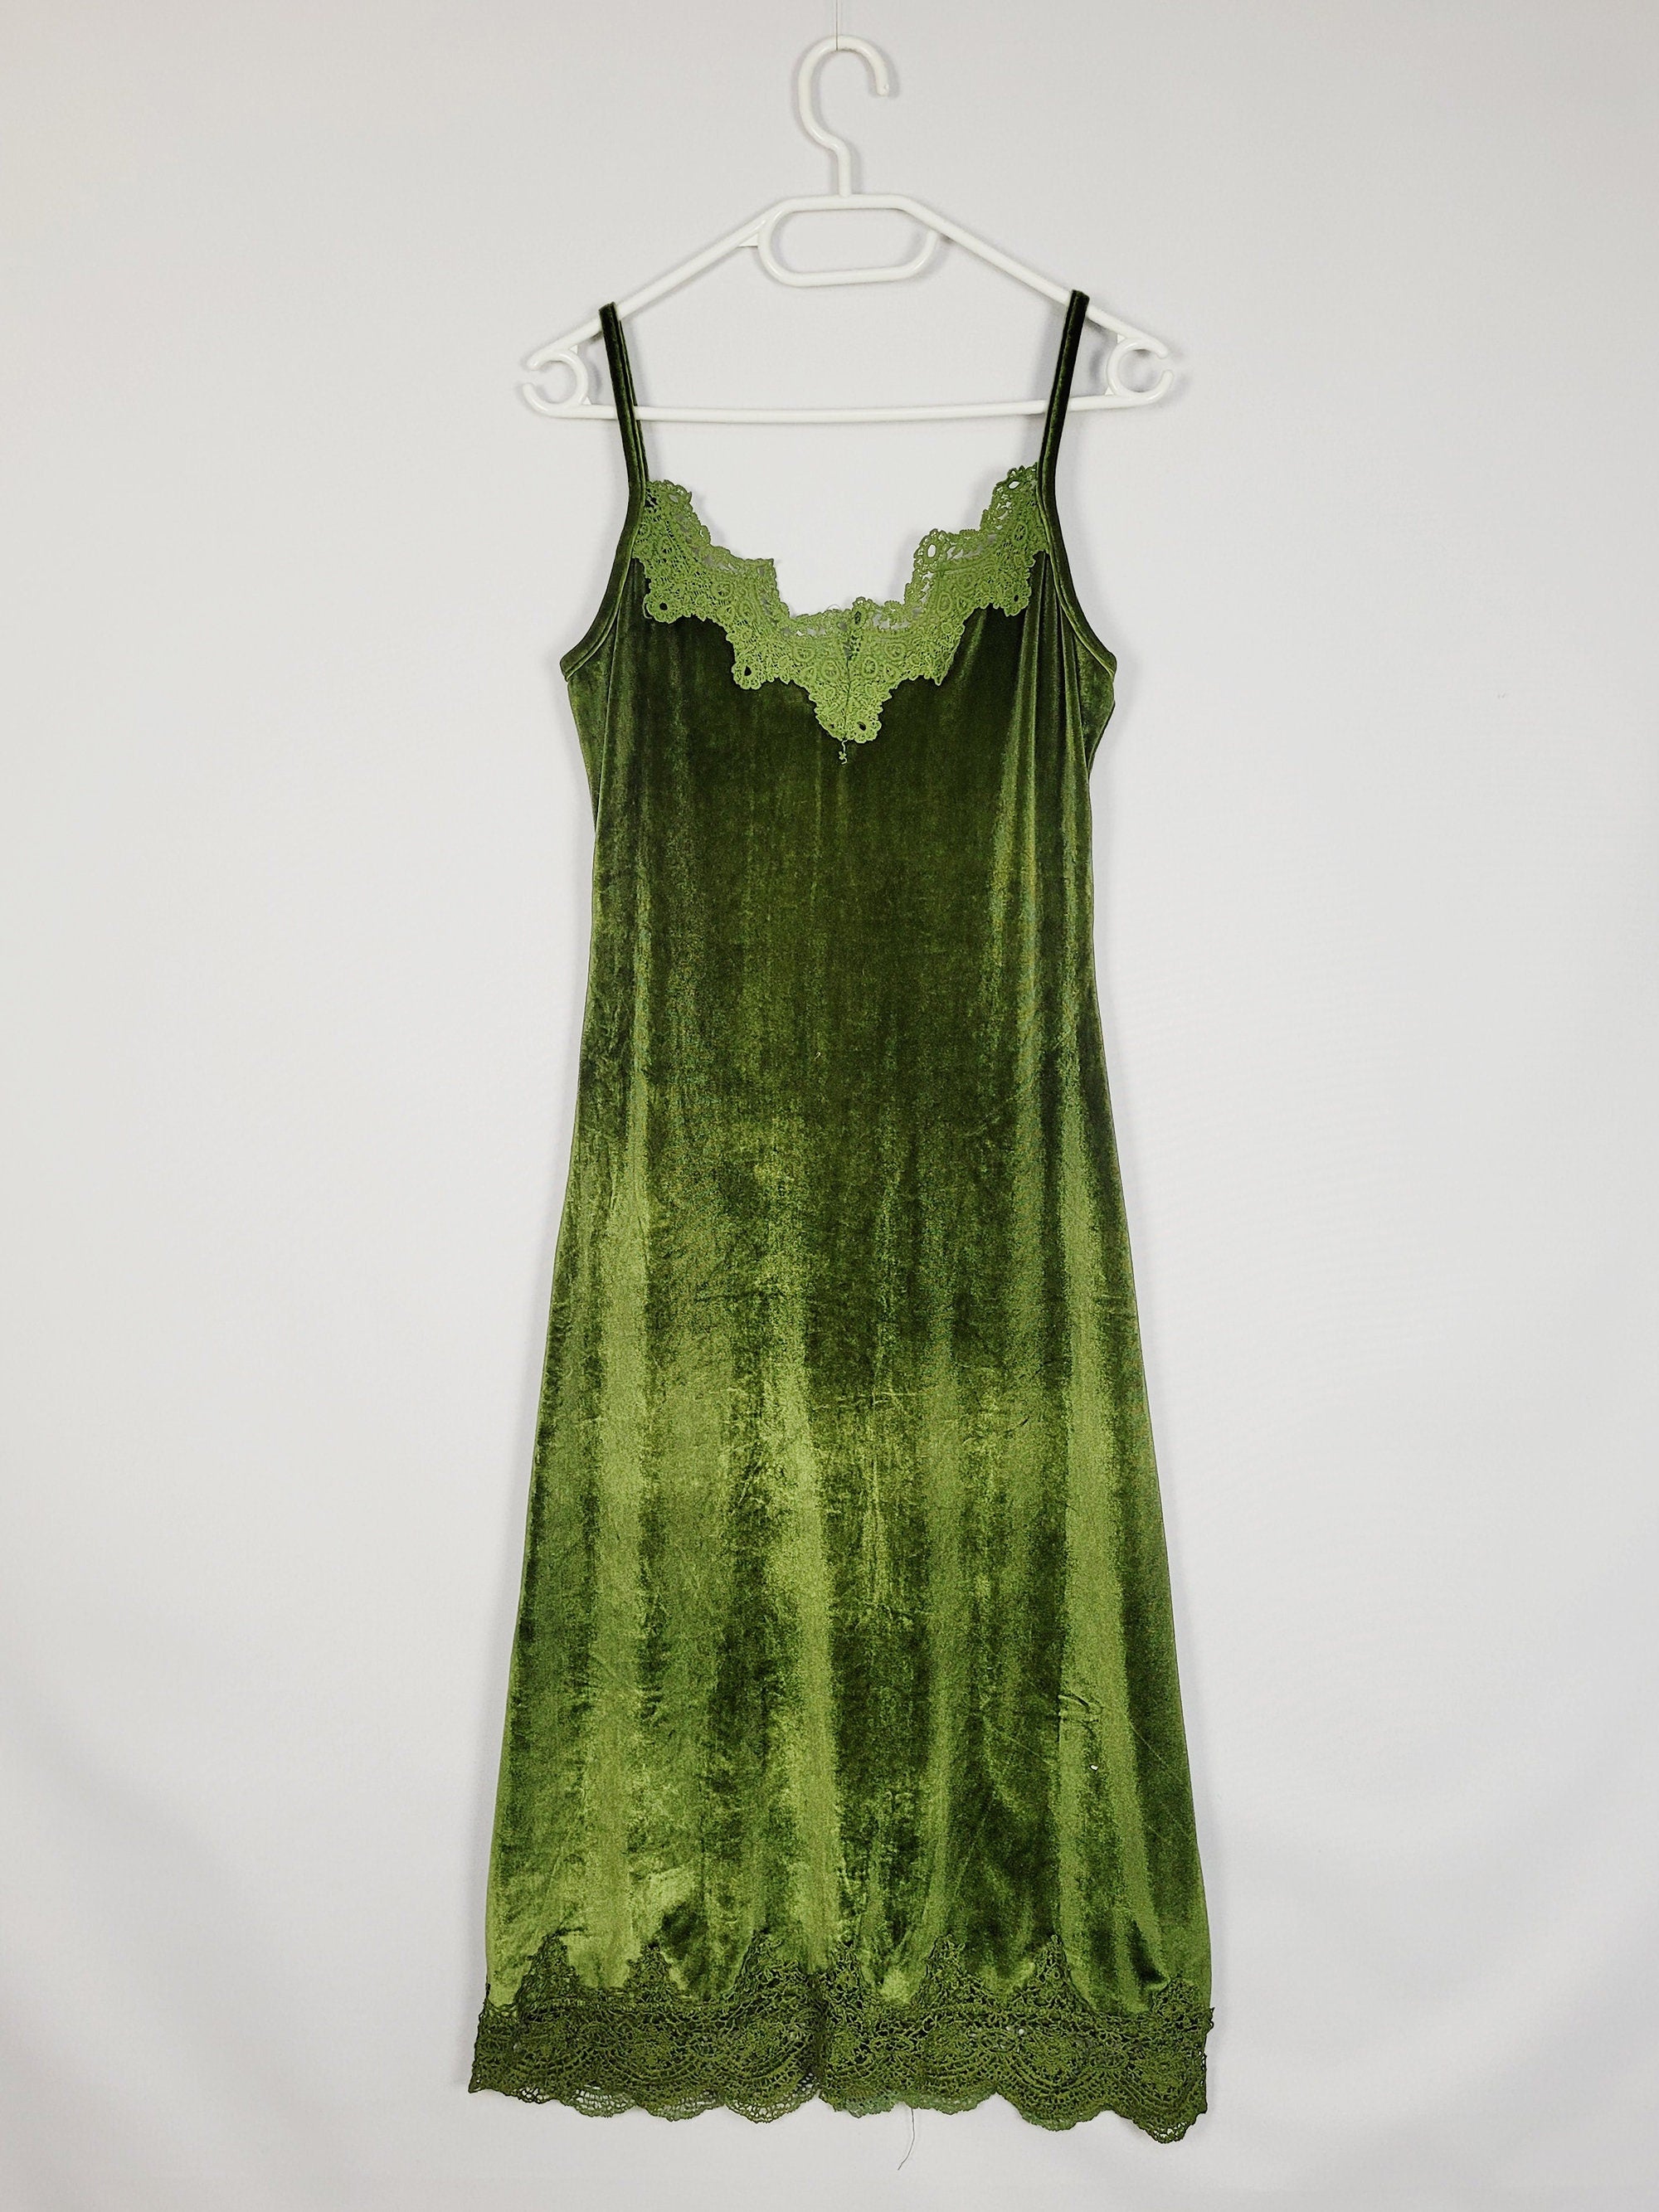 90s retro moss green velveteen minimalist laces midi dress